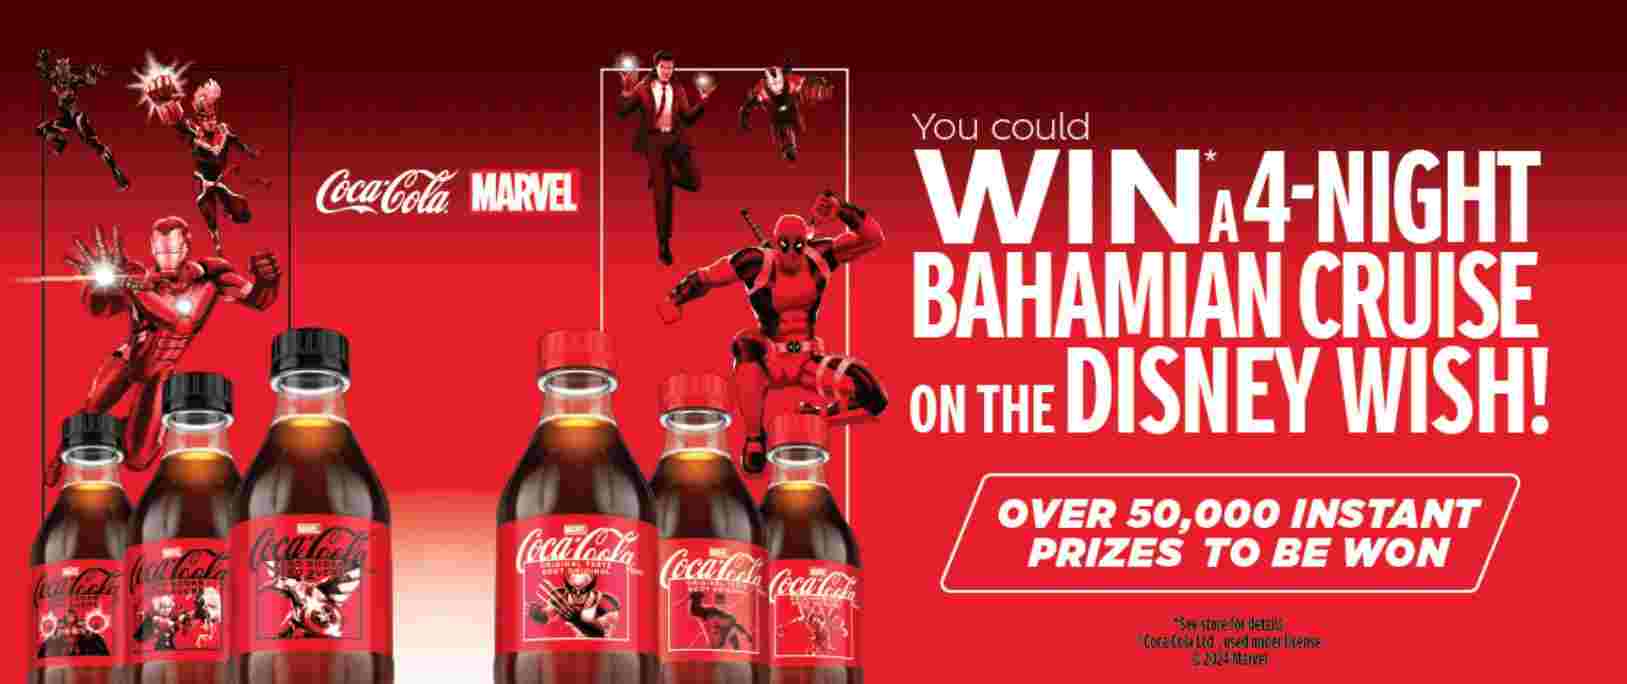 Circle K Coca-Cola Marvel Contest